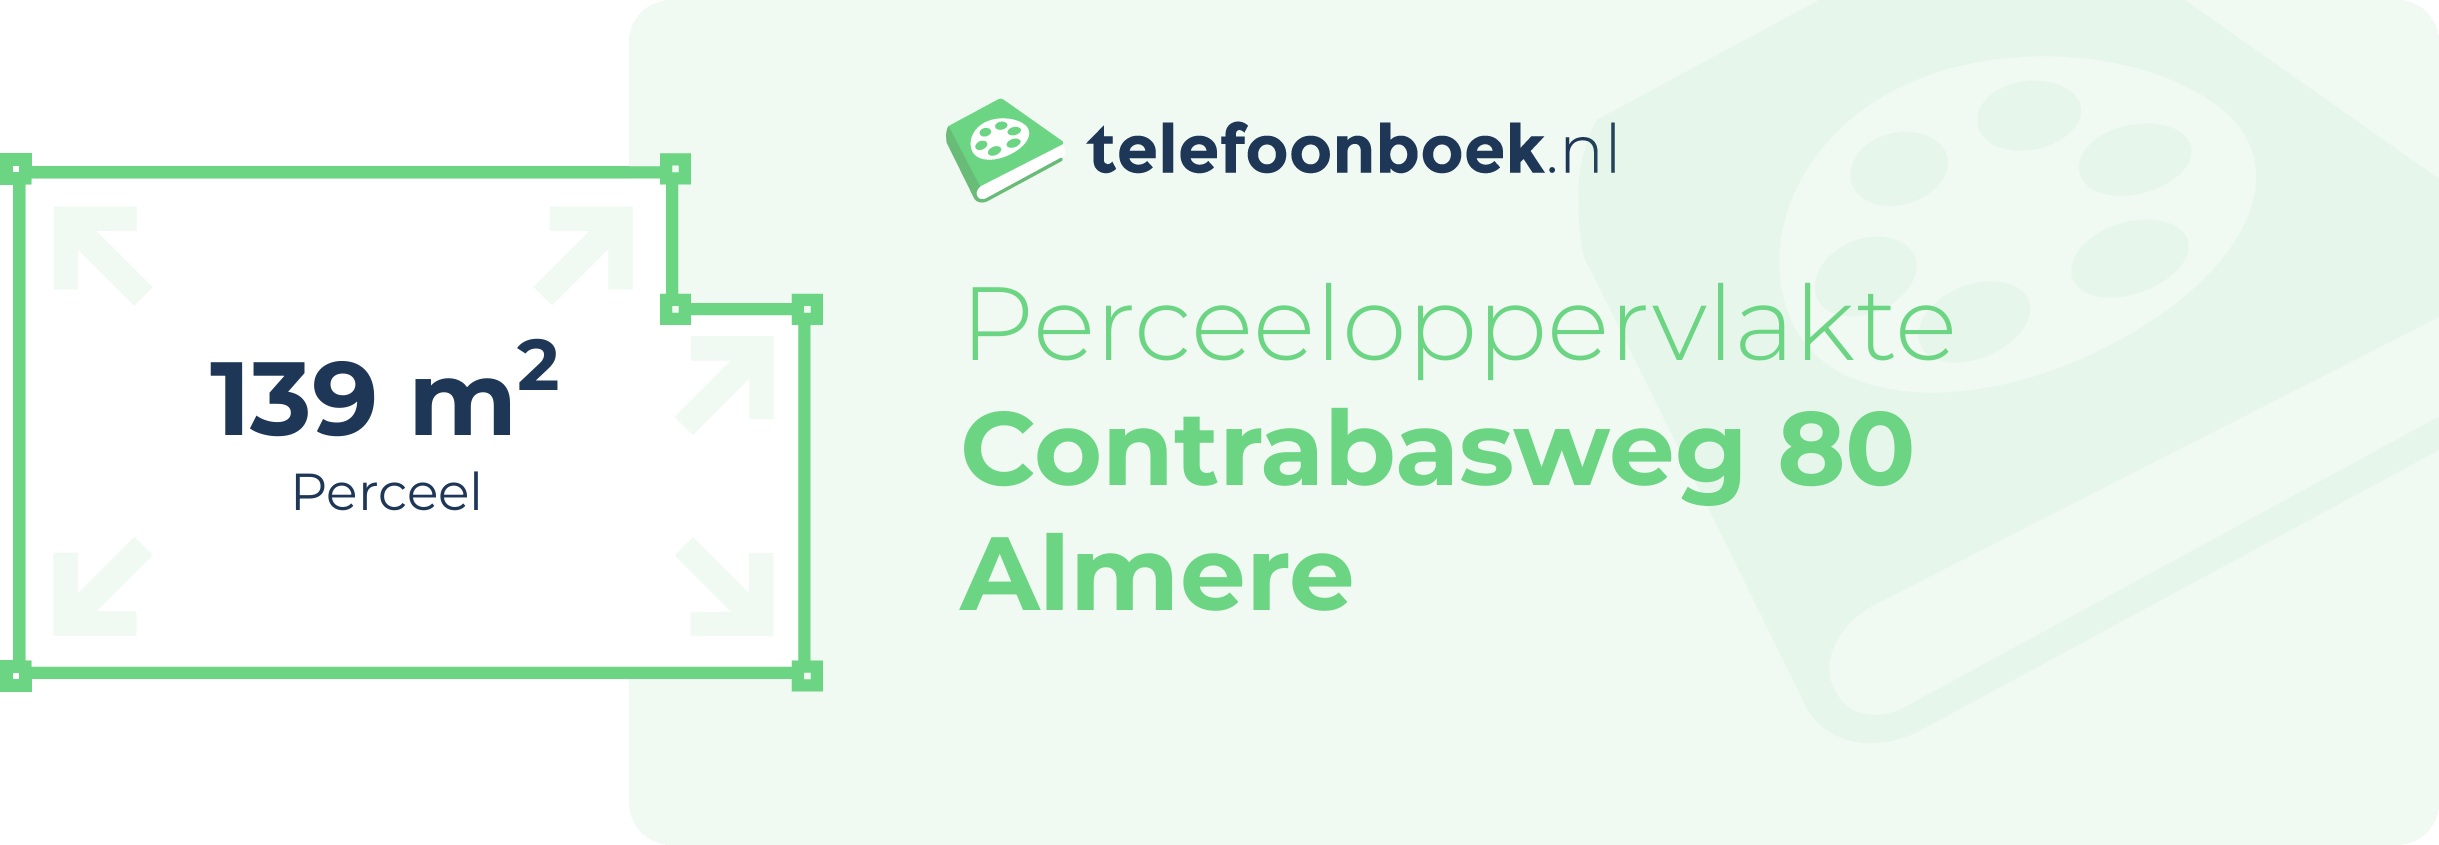 Perceeloppervlakte Contrabasweg 80 Almere